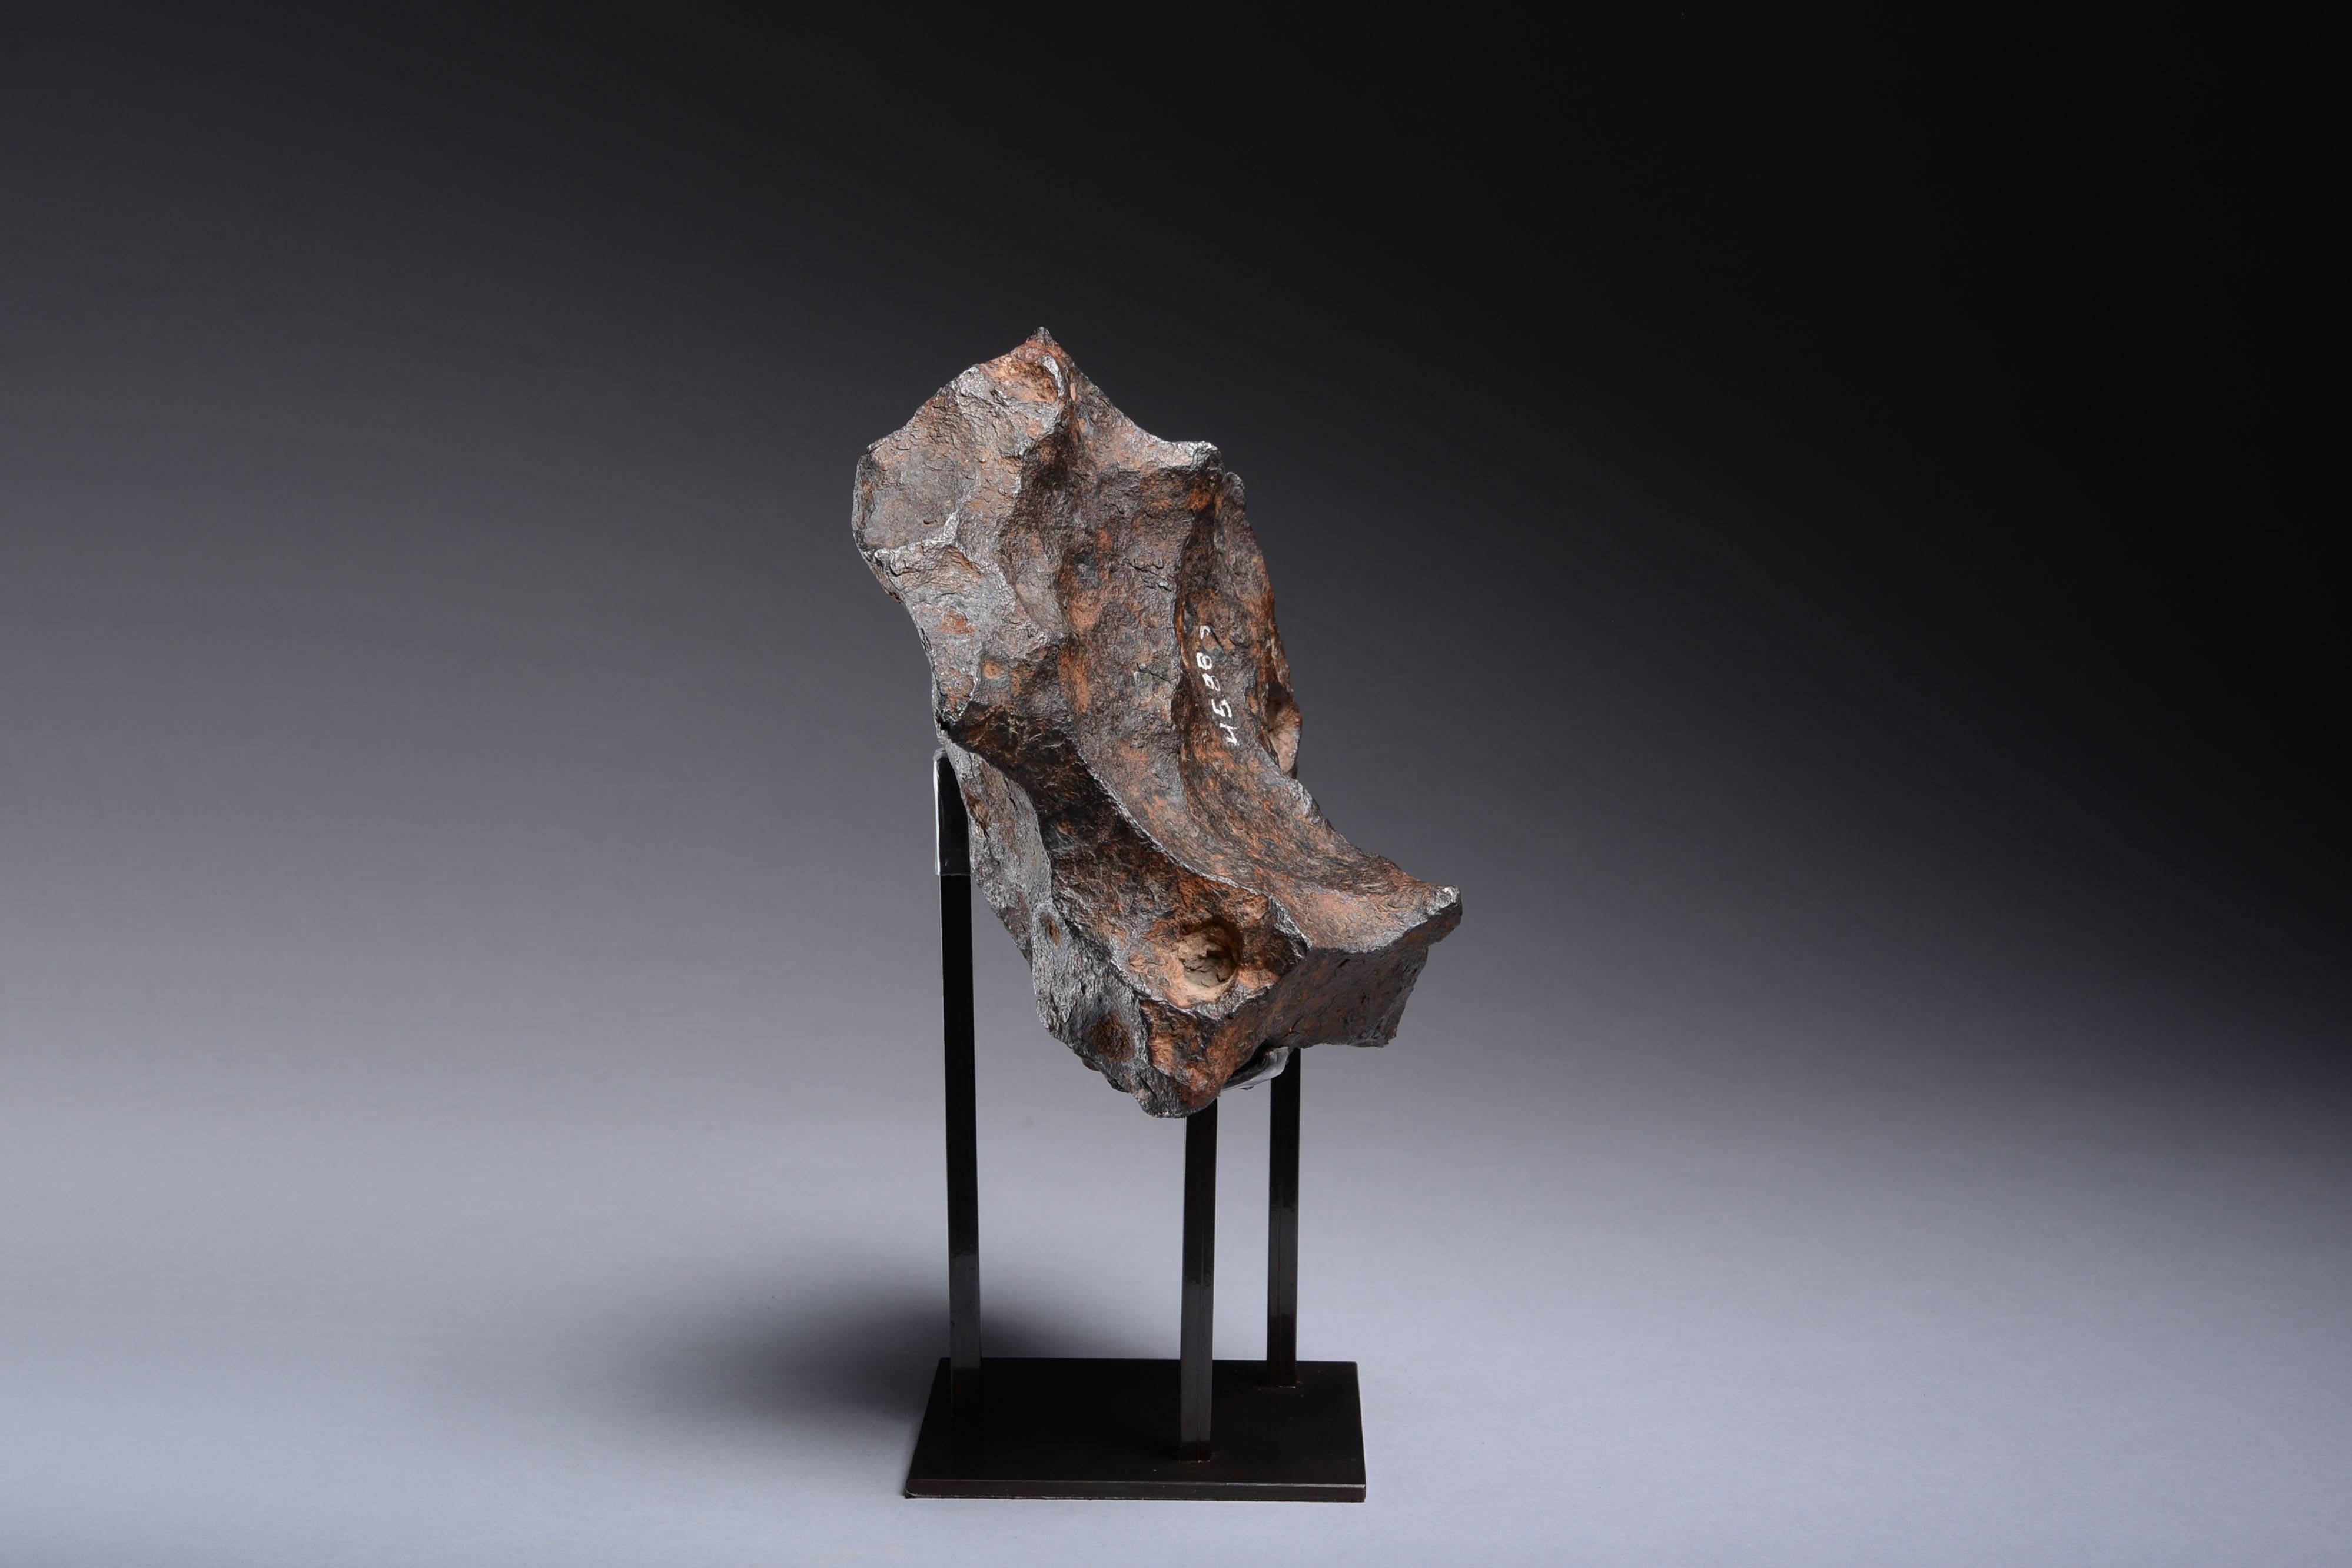 Superb Extra-Terrestrial Abstract Sculpture, Iron Meteorite 1